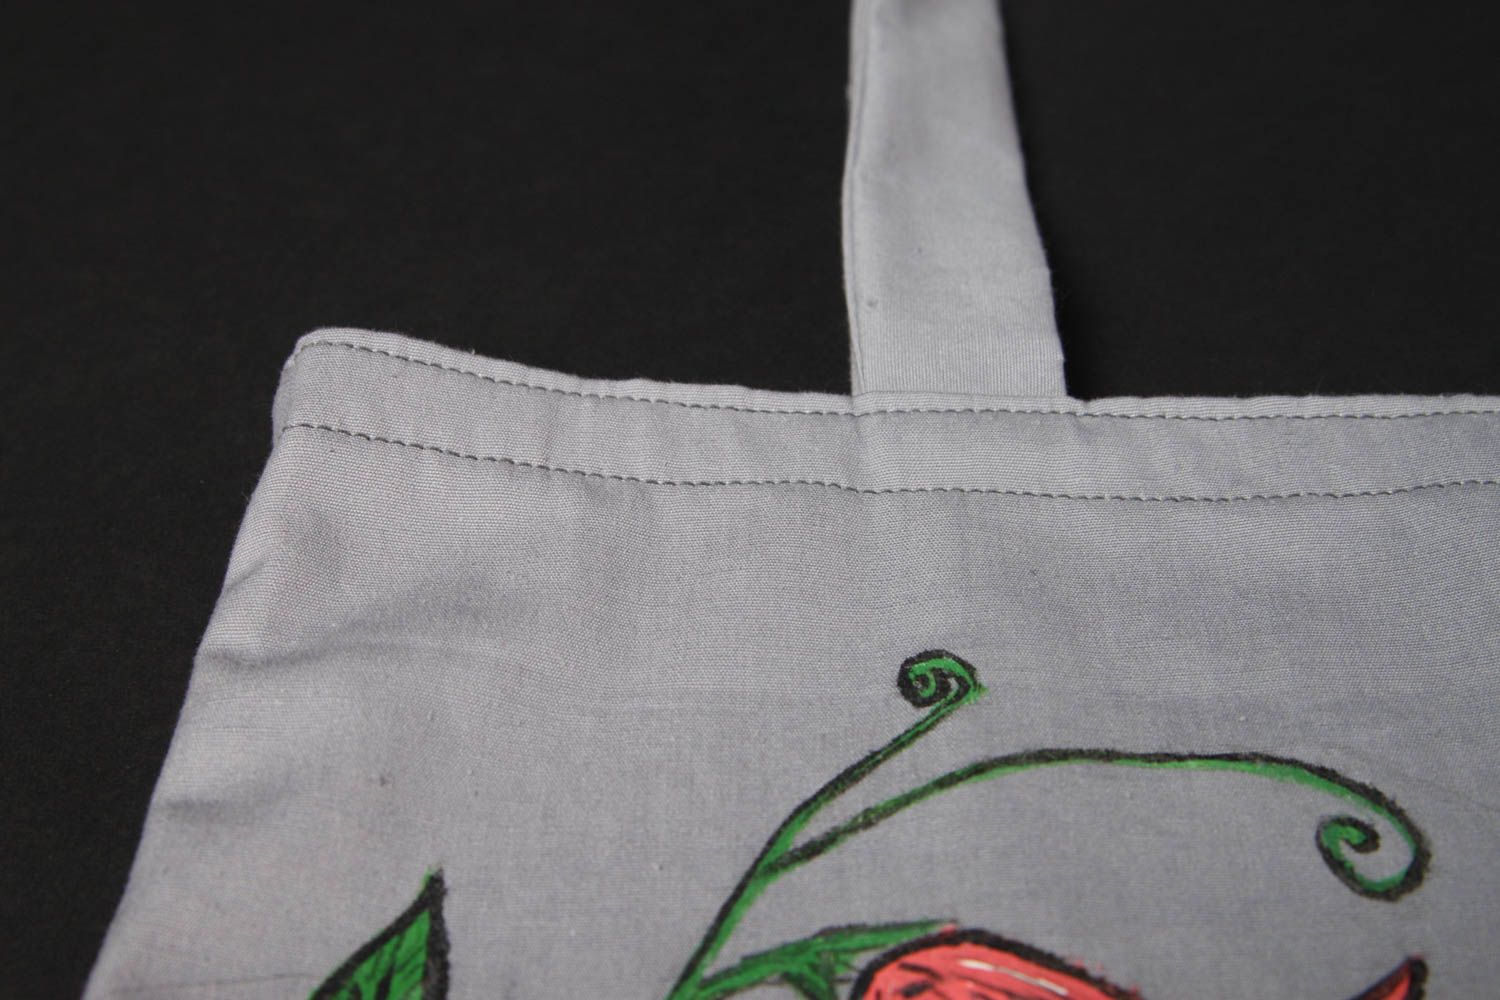 Handmade bag handbags for women fashion handbags designer accessories gift ideas photo 4